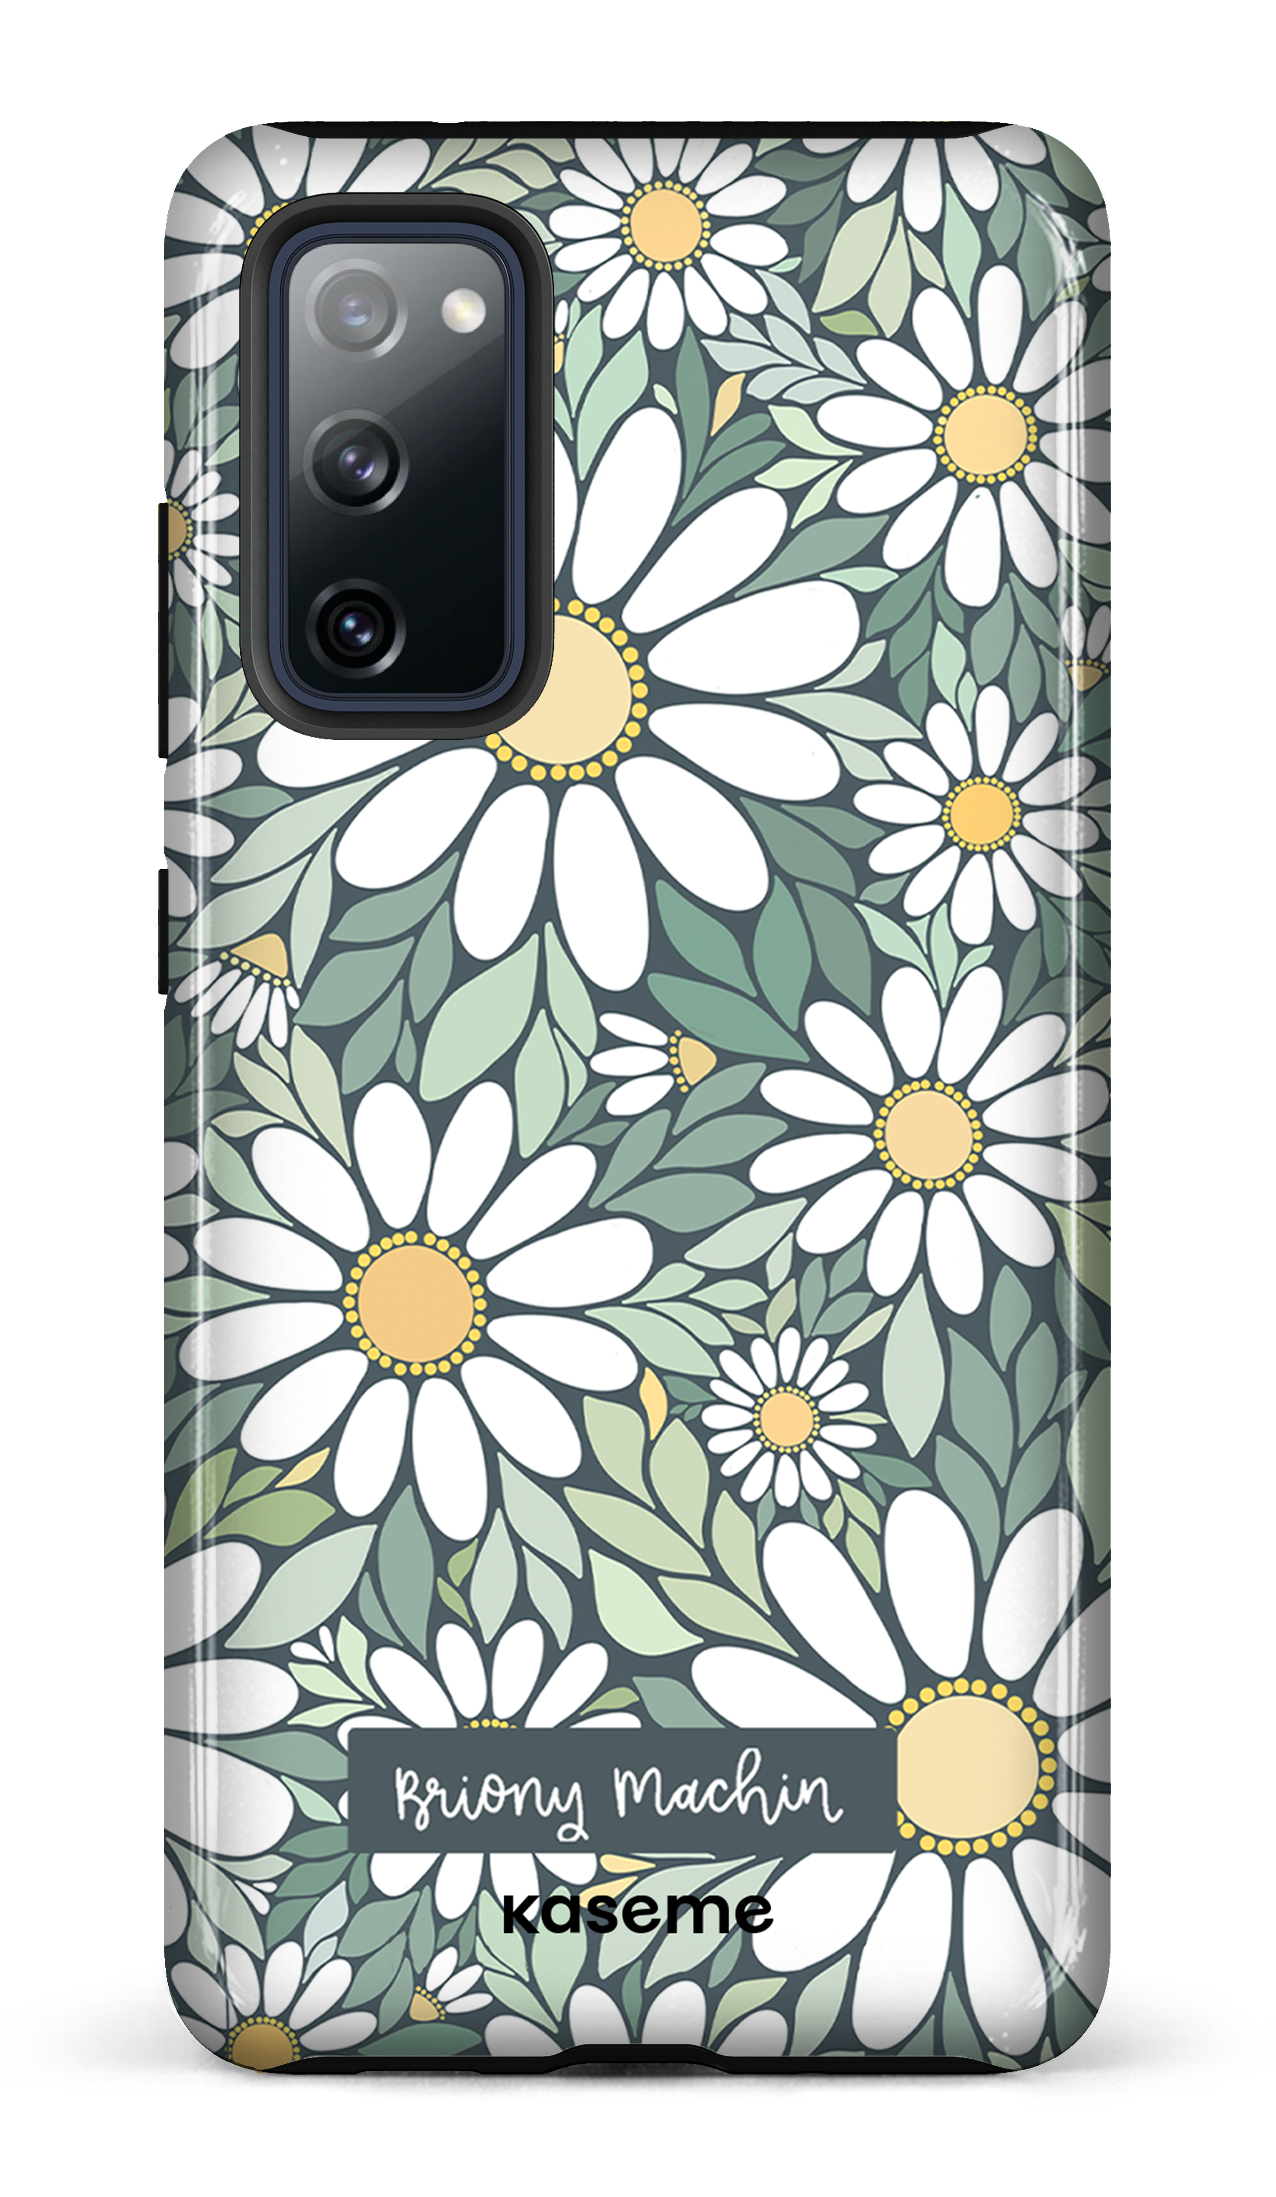 Daisy Blooms by Briony Machin - Galaxy S20 FE